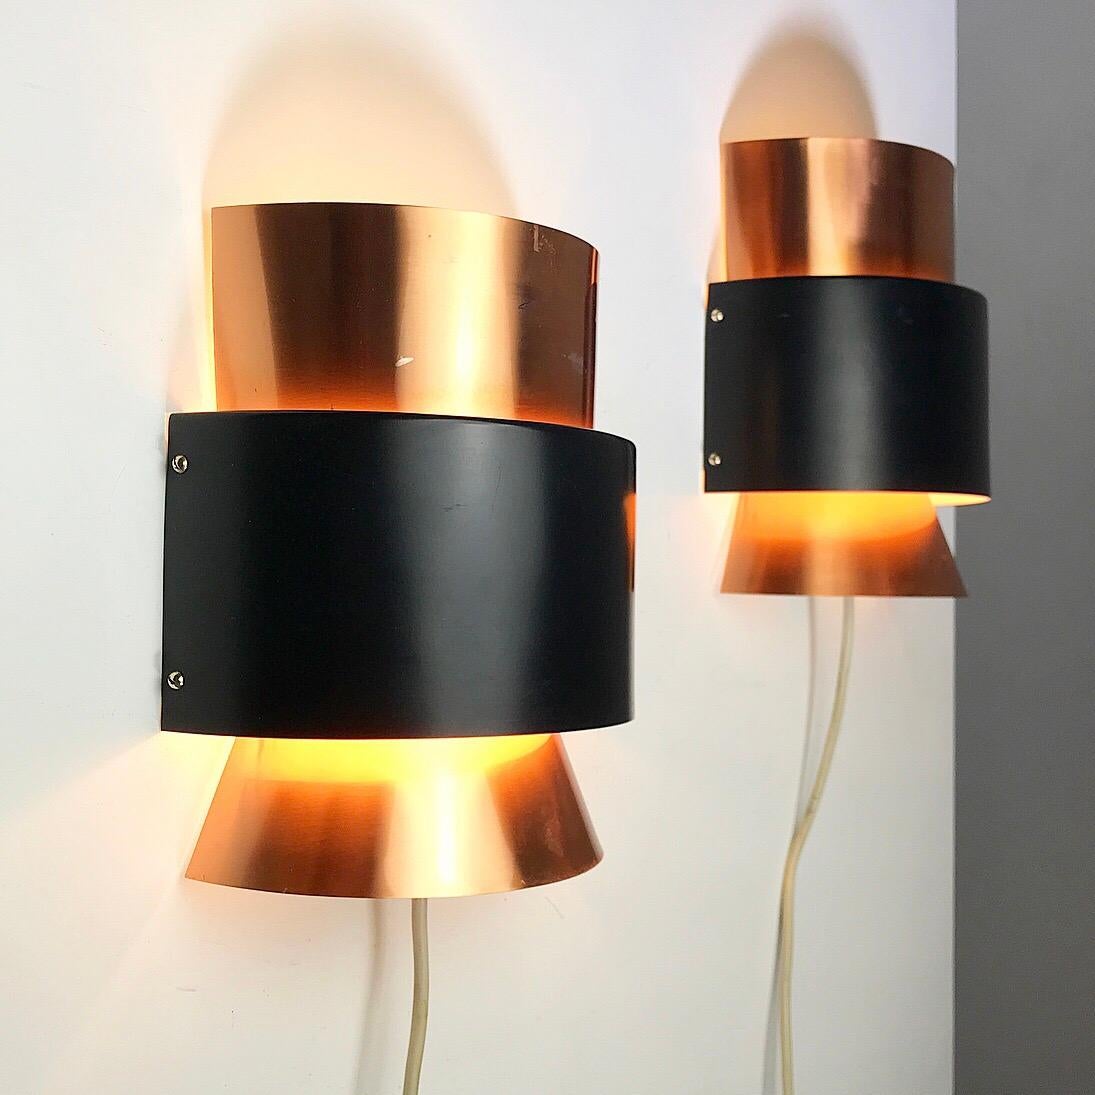 Set of Limited Copper Wall Lights by Fog & Mørup, Denmark, 1960s For Sale 1